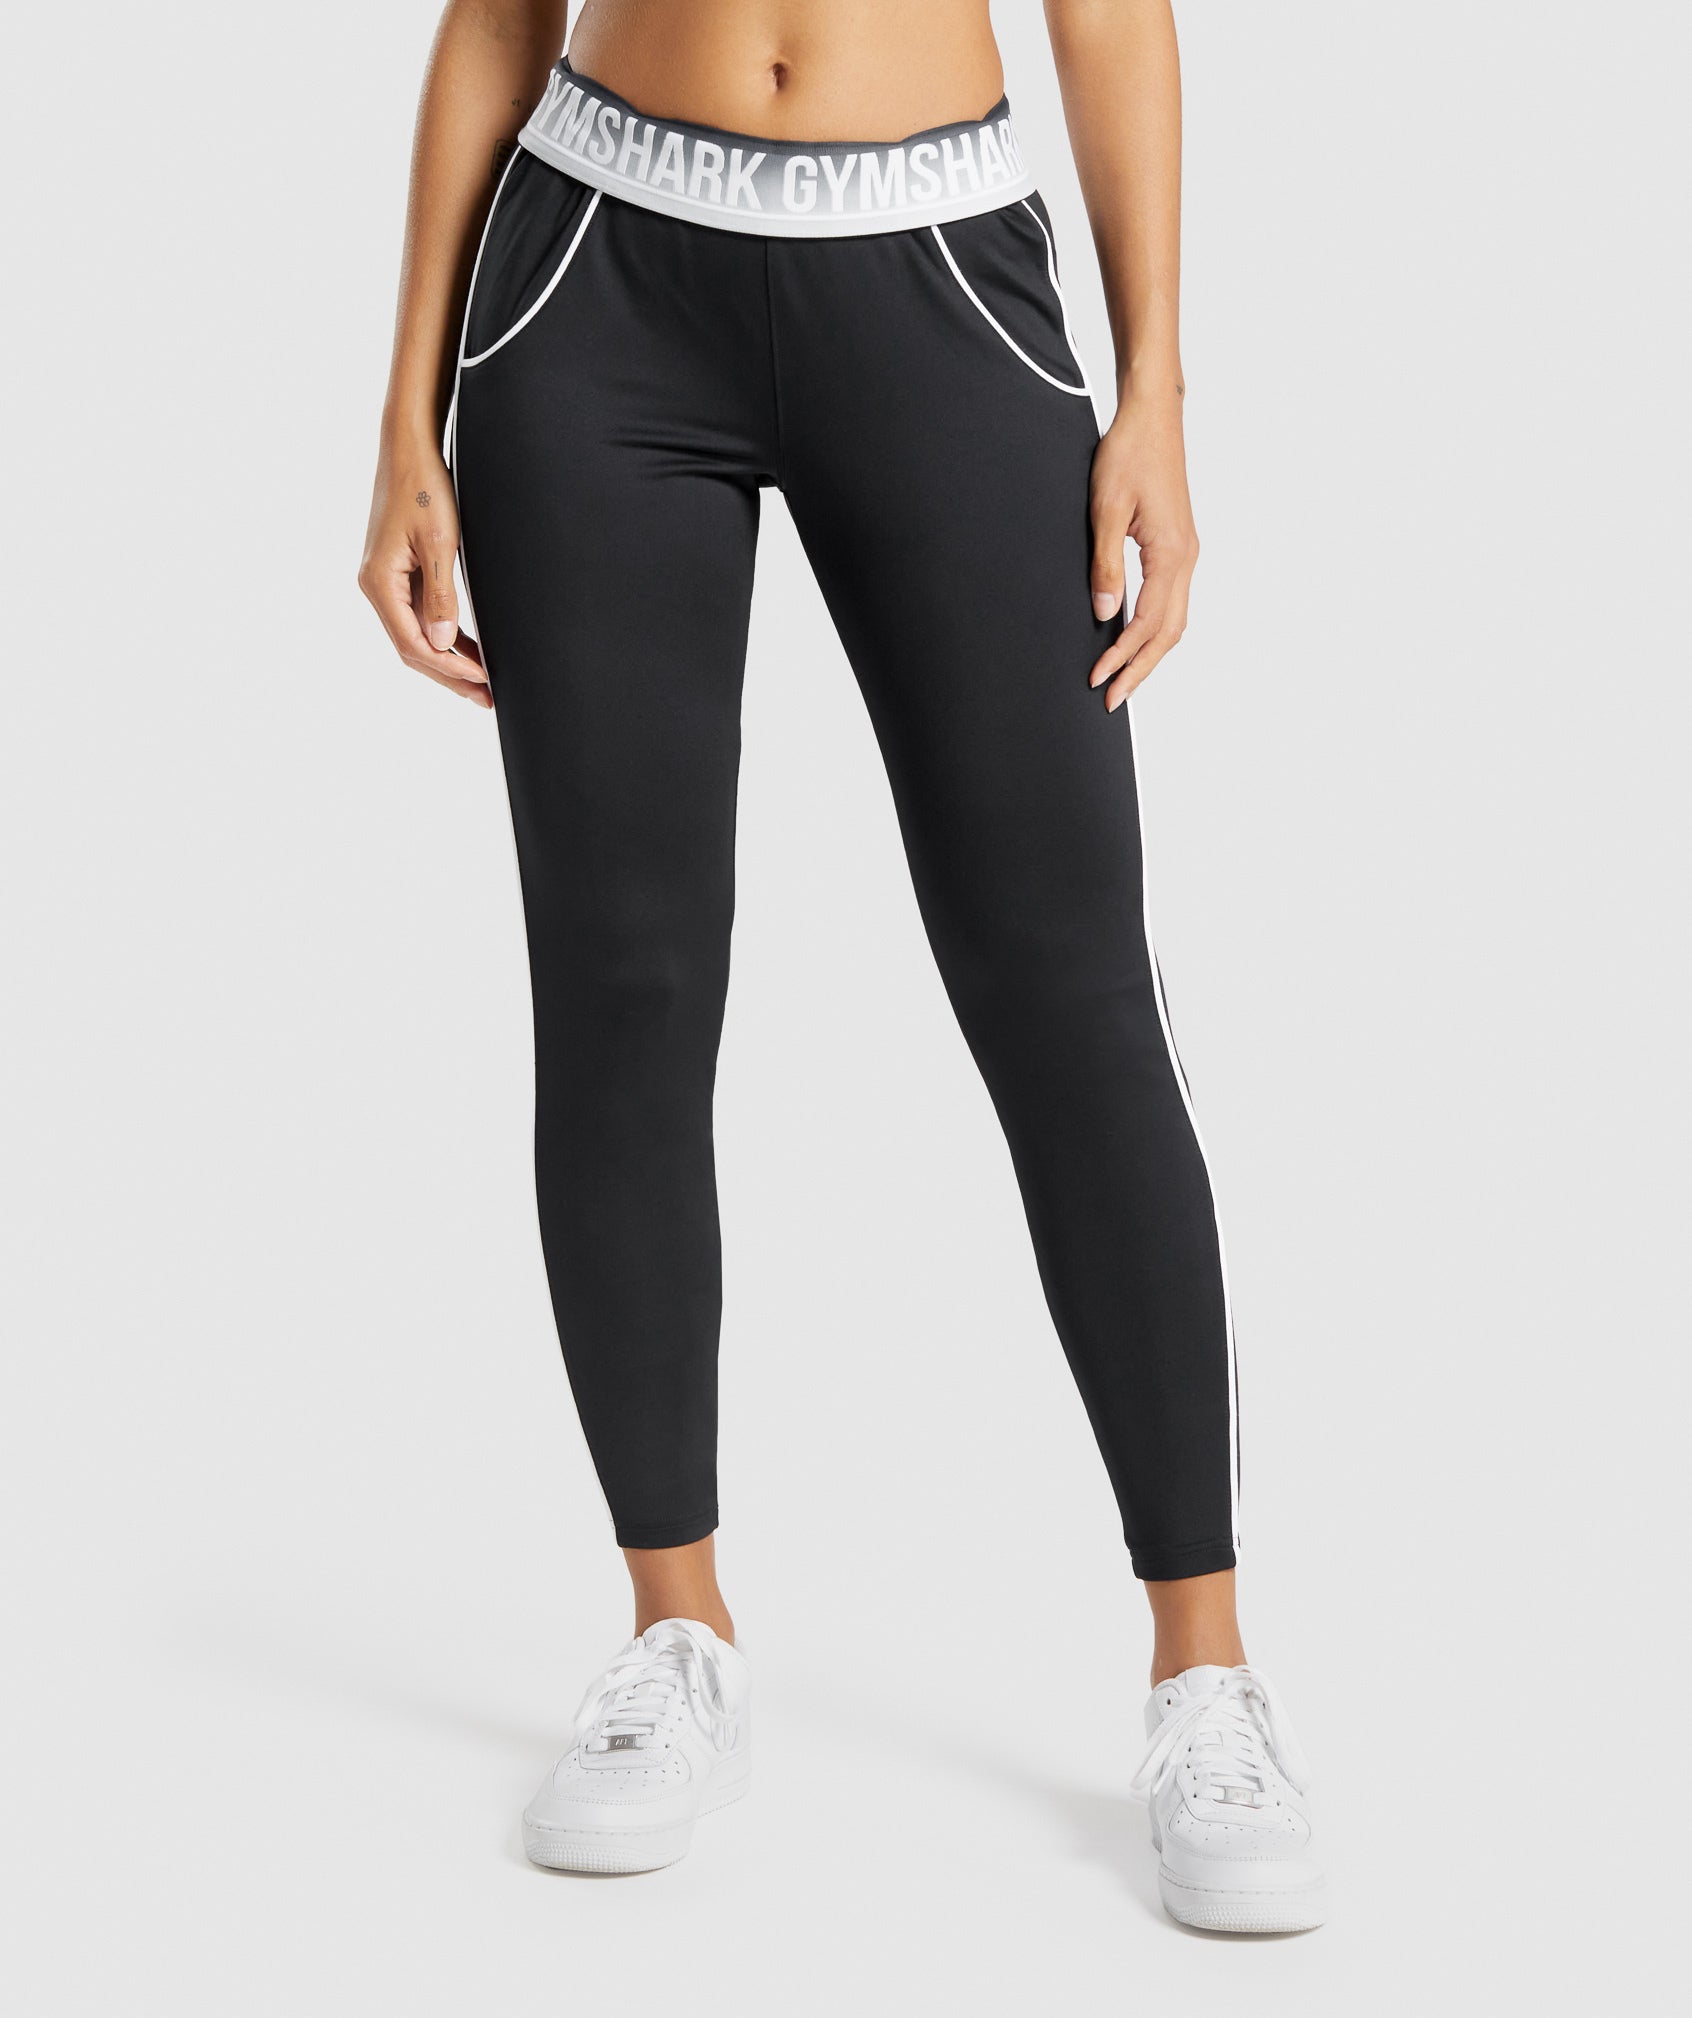 Gymshark Sweatpant Womens Small Black Gray Ankle Crop Jogger Sweatpants